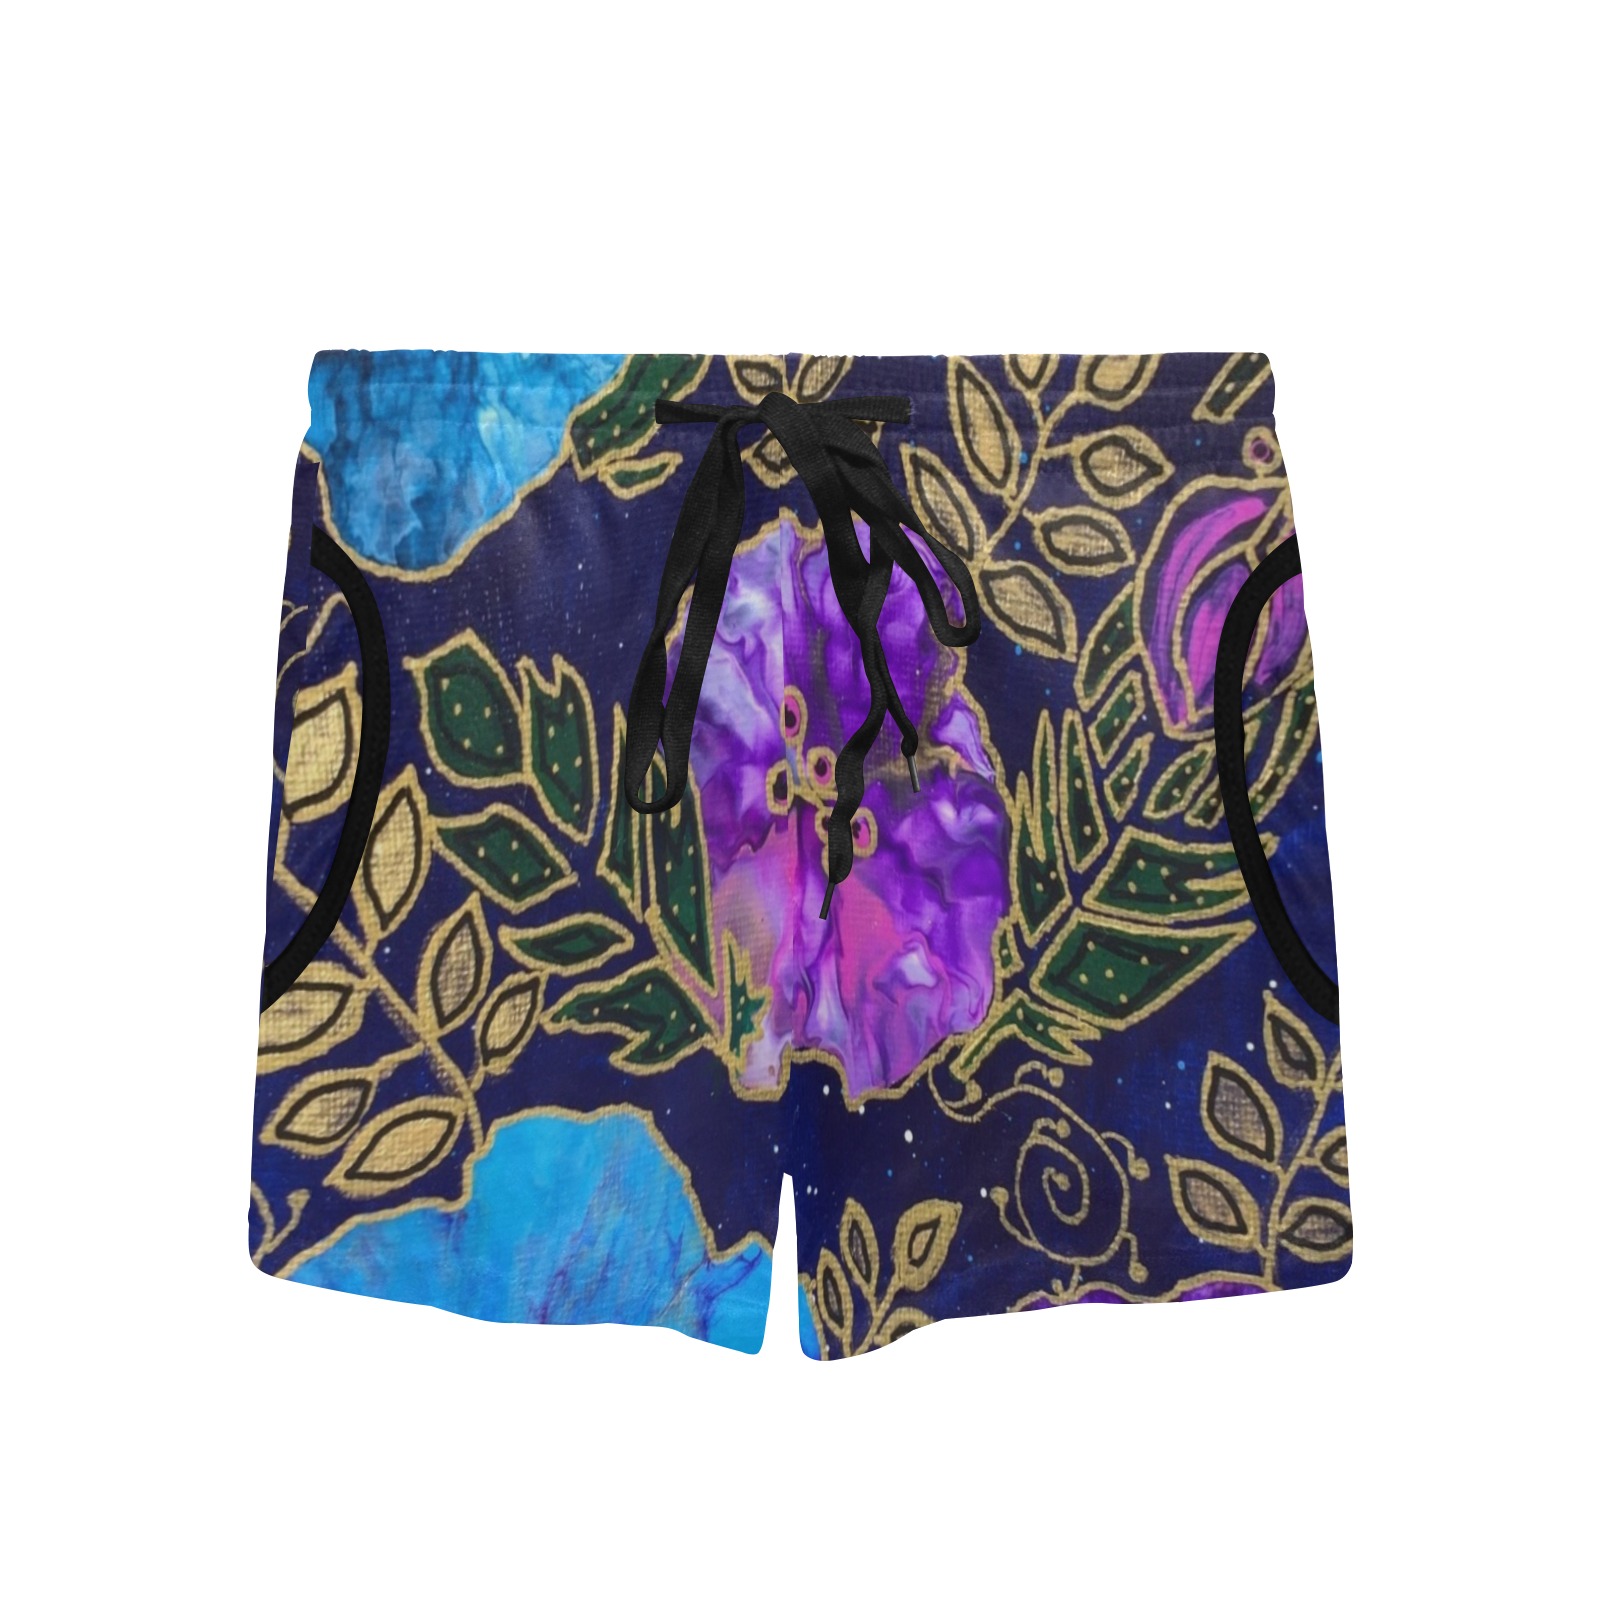 Dark Blue Floral Women's Mid-Length Board Shorts (Model L55)